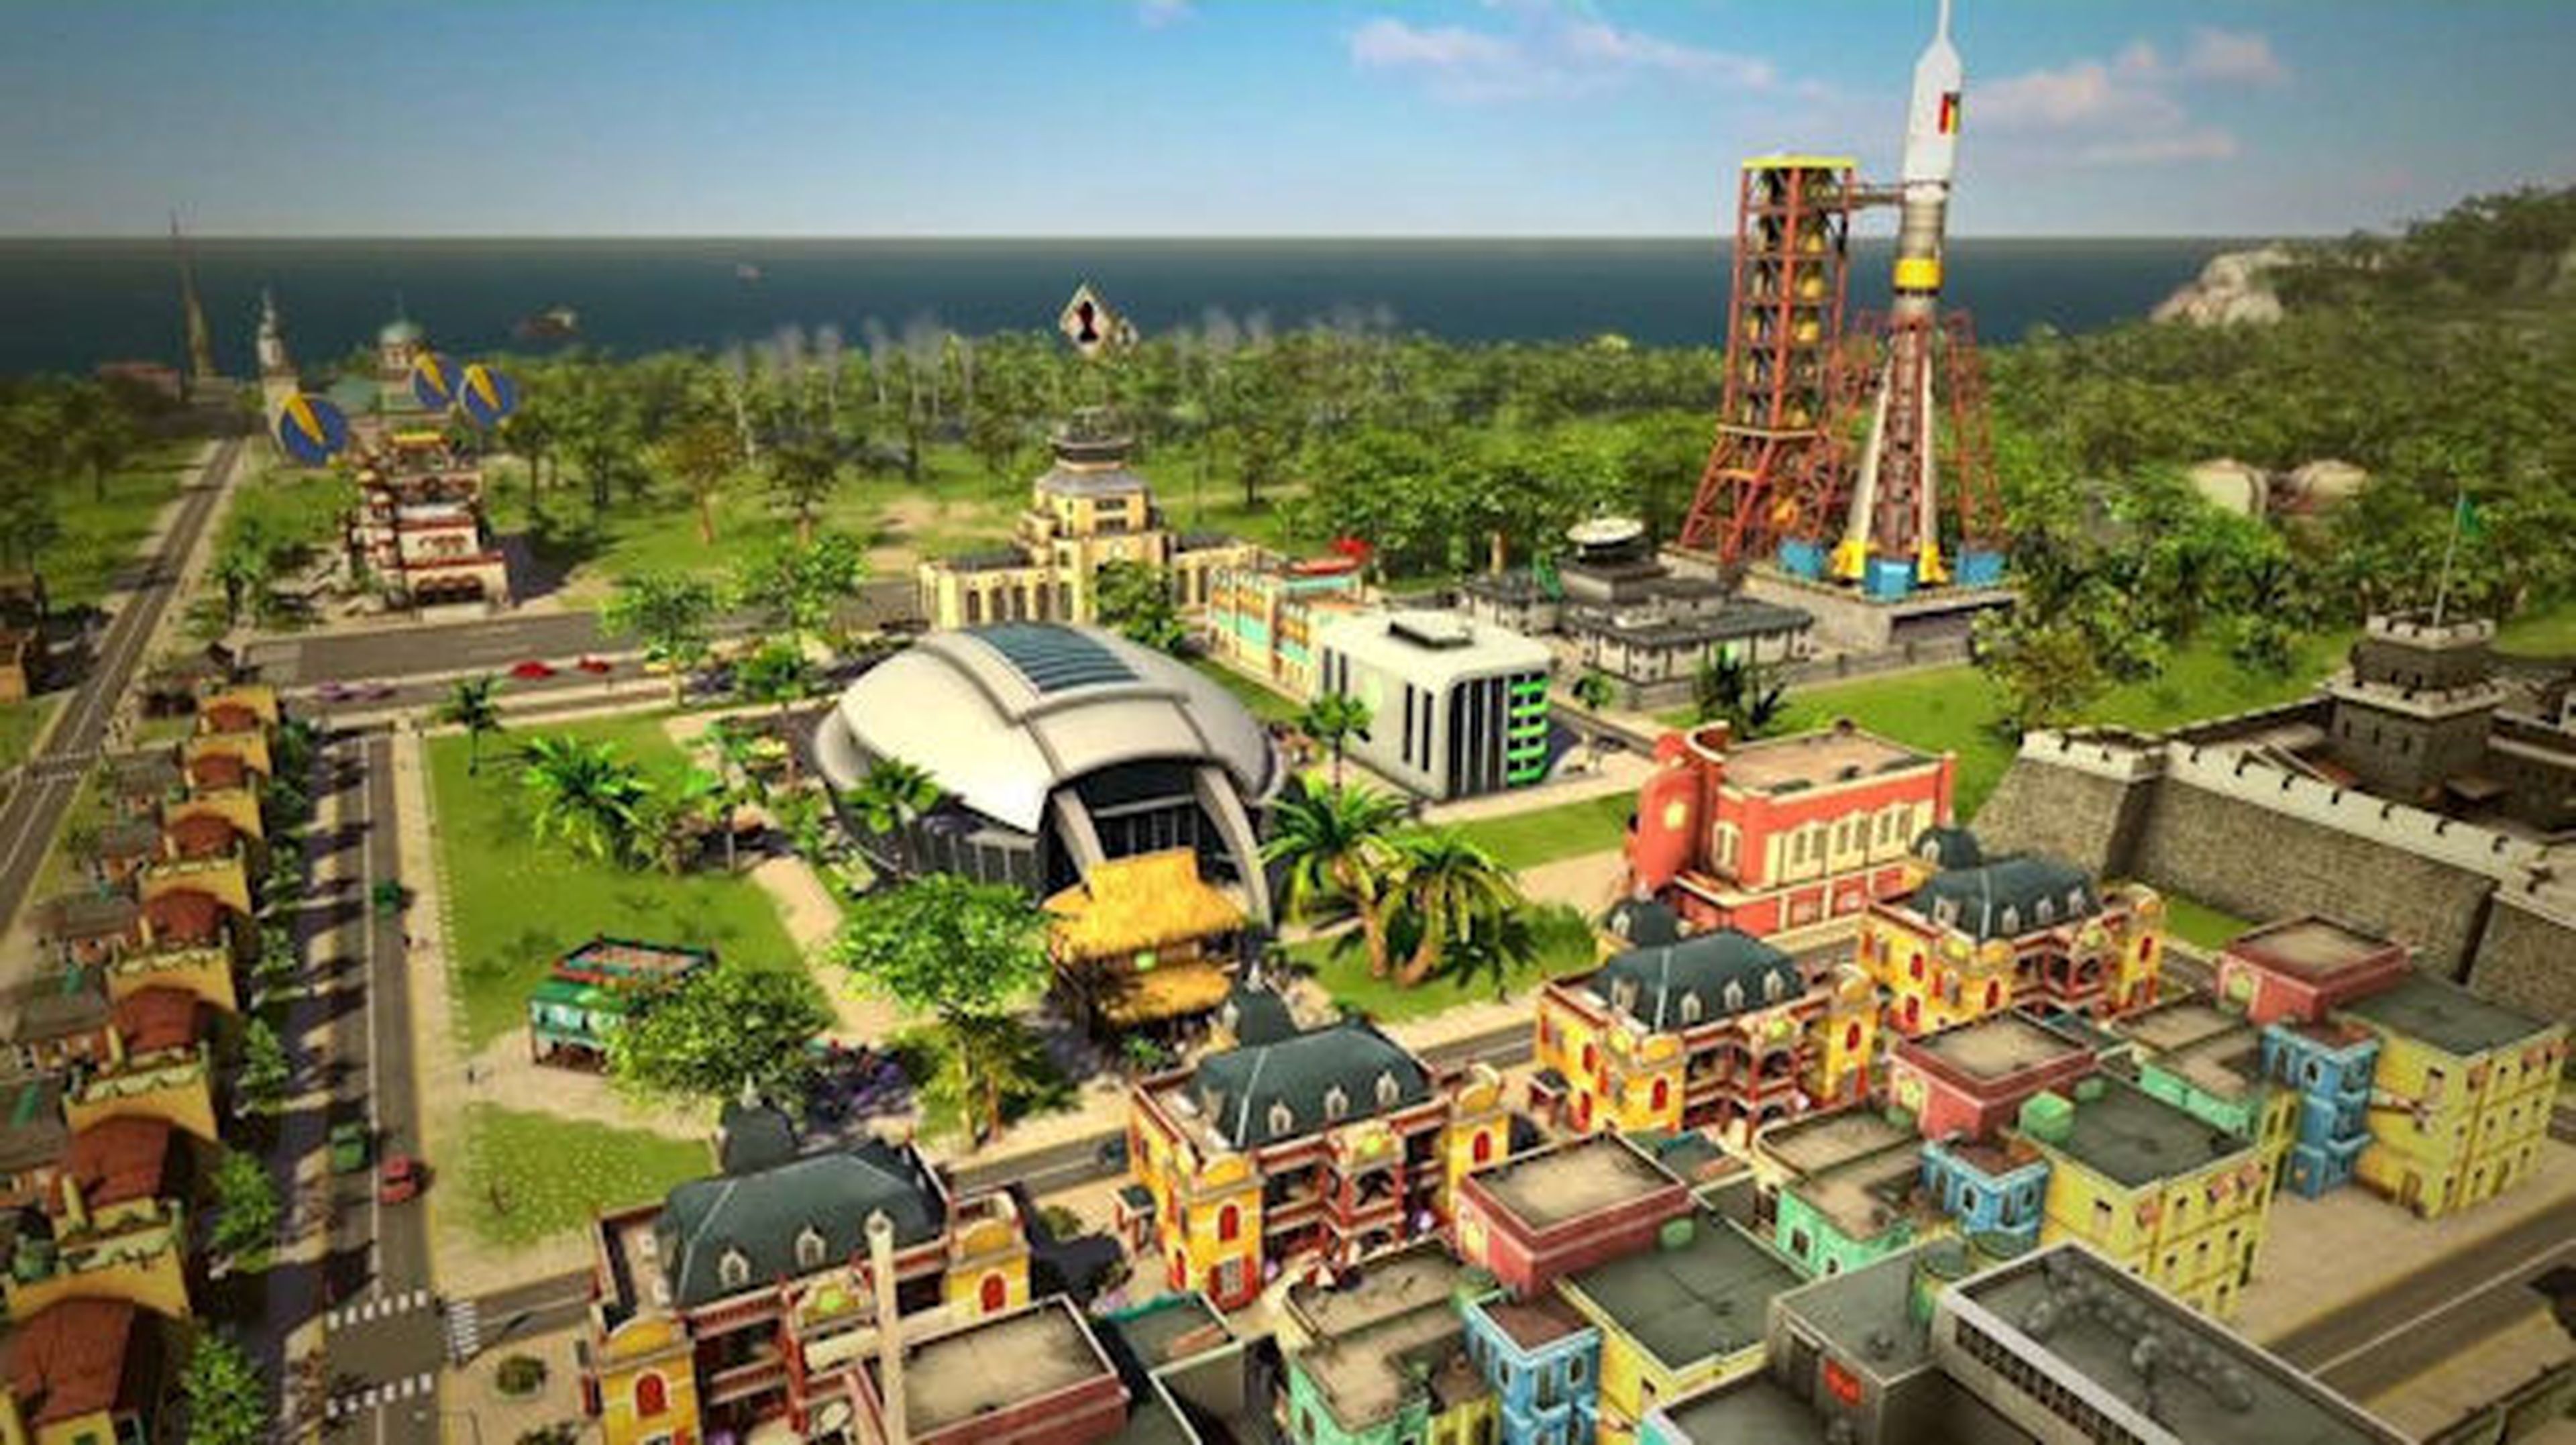 Análisis de Tropico 5 para PS4